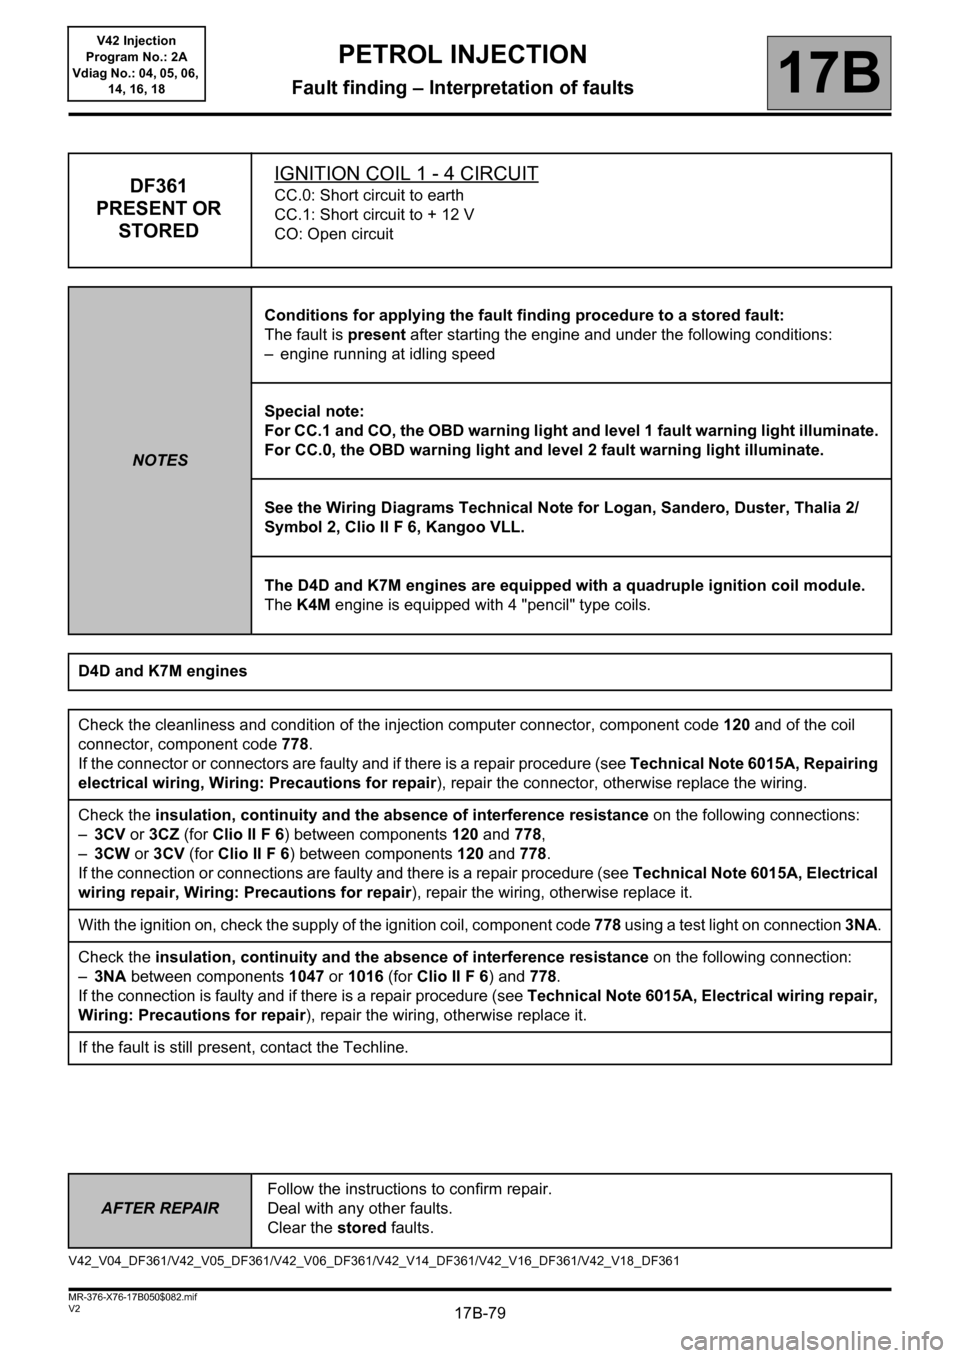 RENAULT KANGOO 2013 X61 / 2.G Petrol V42 Injection Manual PDF 17B-79V2 MR-376-X76-17B050$082.mif
PETROL INJECTION
Fault finding – Interpretation of faults17B
V42 Injection
Program No.: 2A
Vdiag No.: 04, 05, 06, 
14, 16, 18
AFTER REPAIRFollow the instructions t